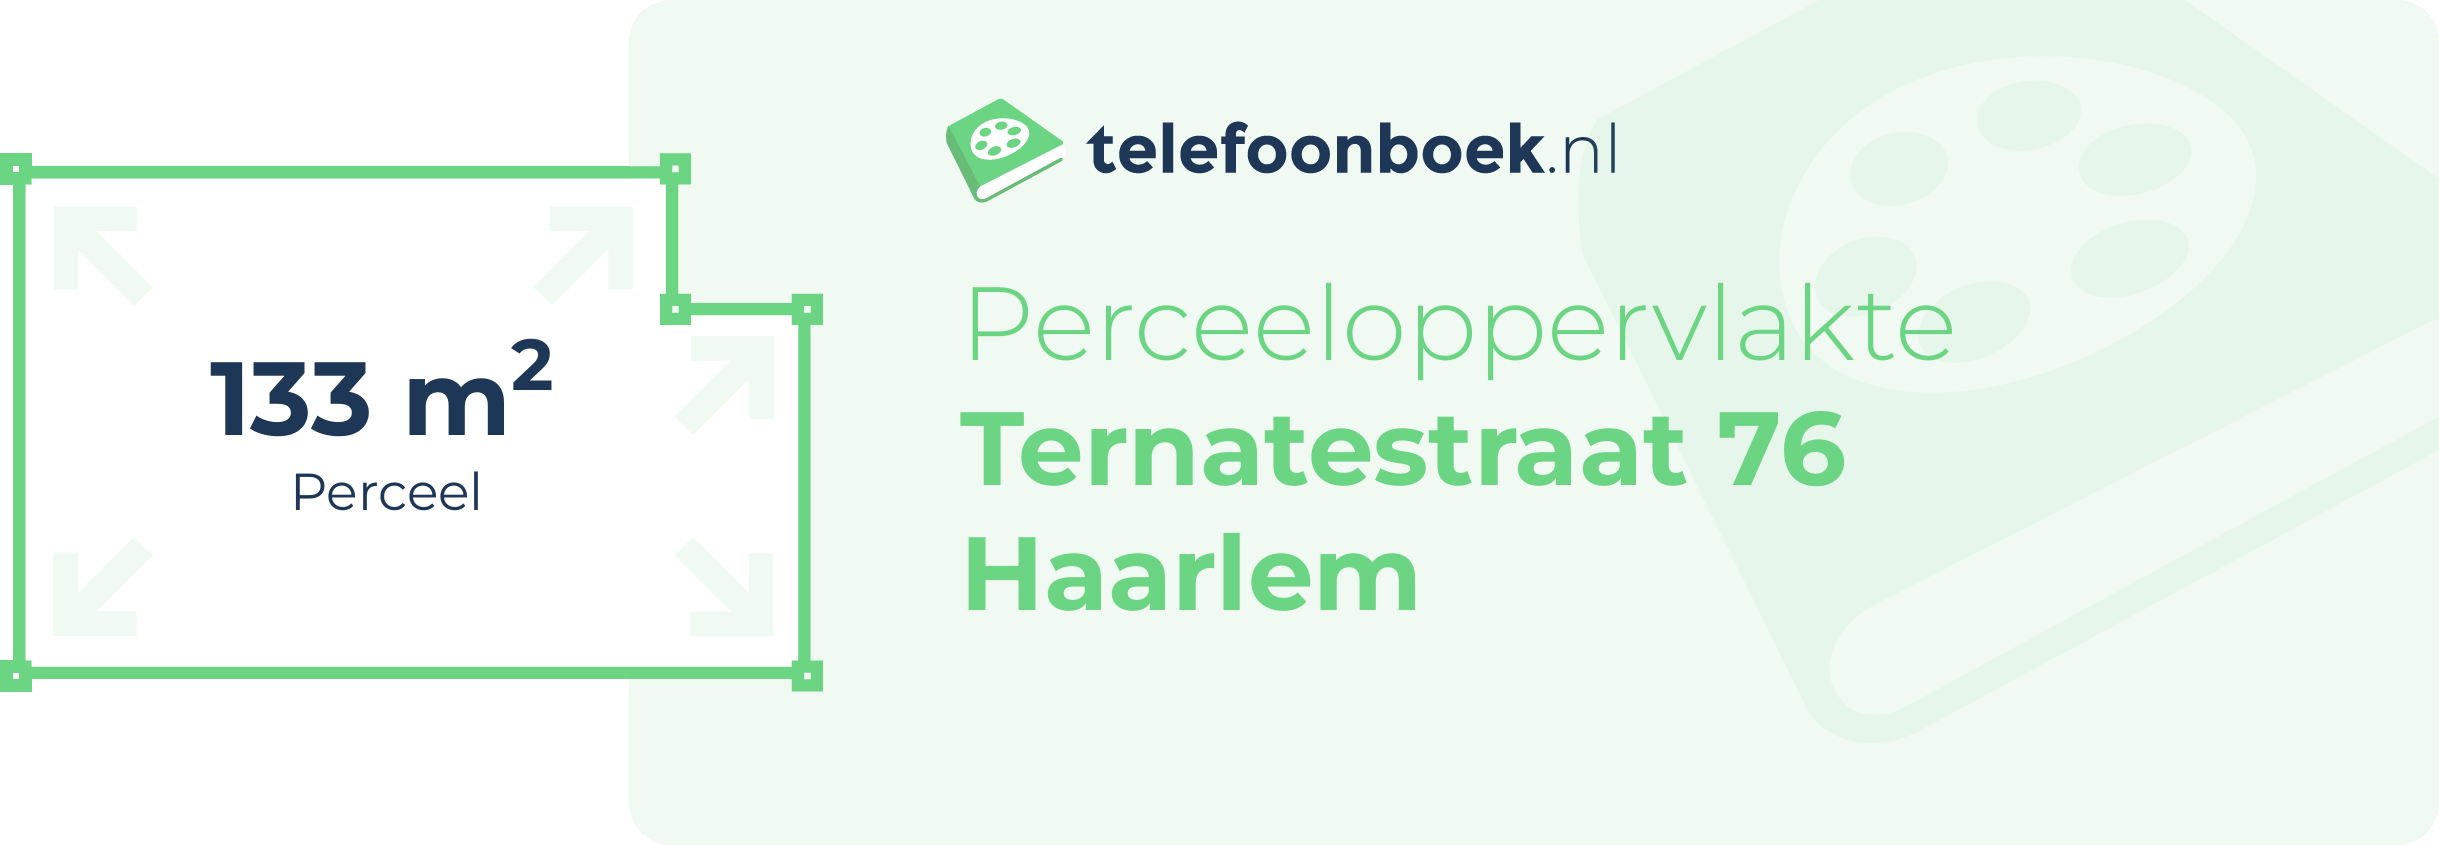 Perceeloppervlakte Ternatestraat 76 Haarlem